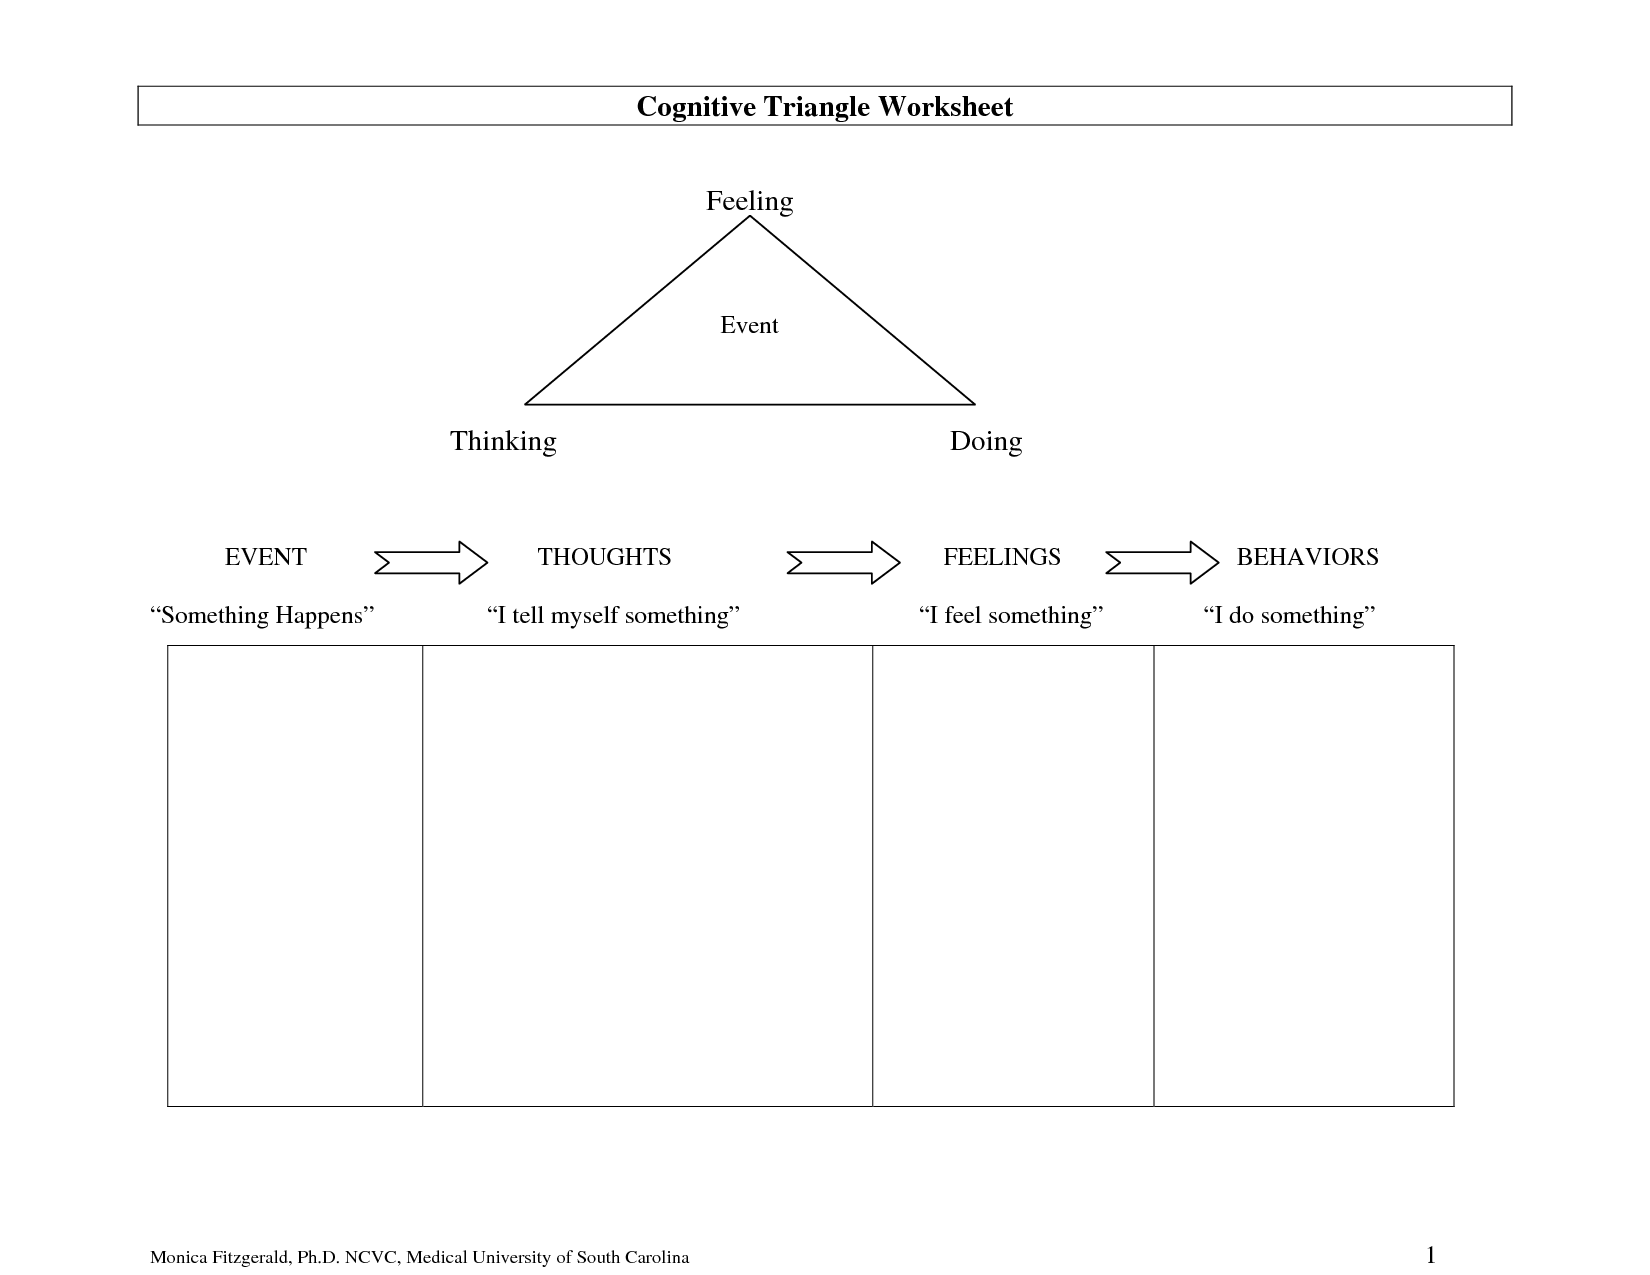 Thought Feeling Behavior Triangle Worksheet Image